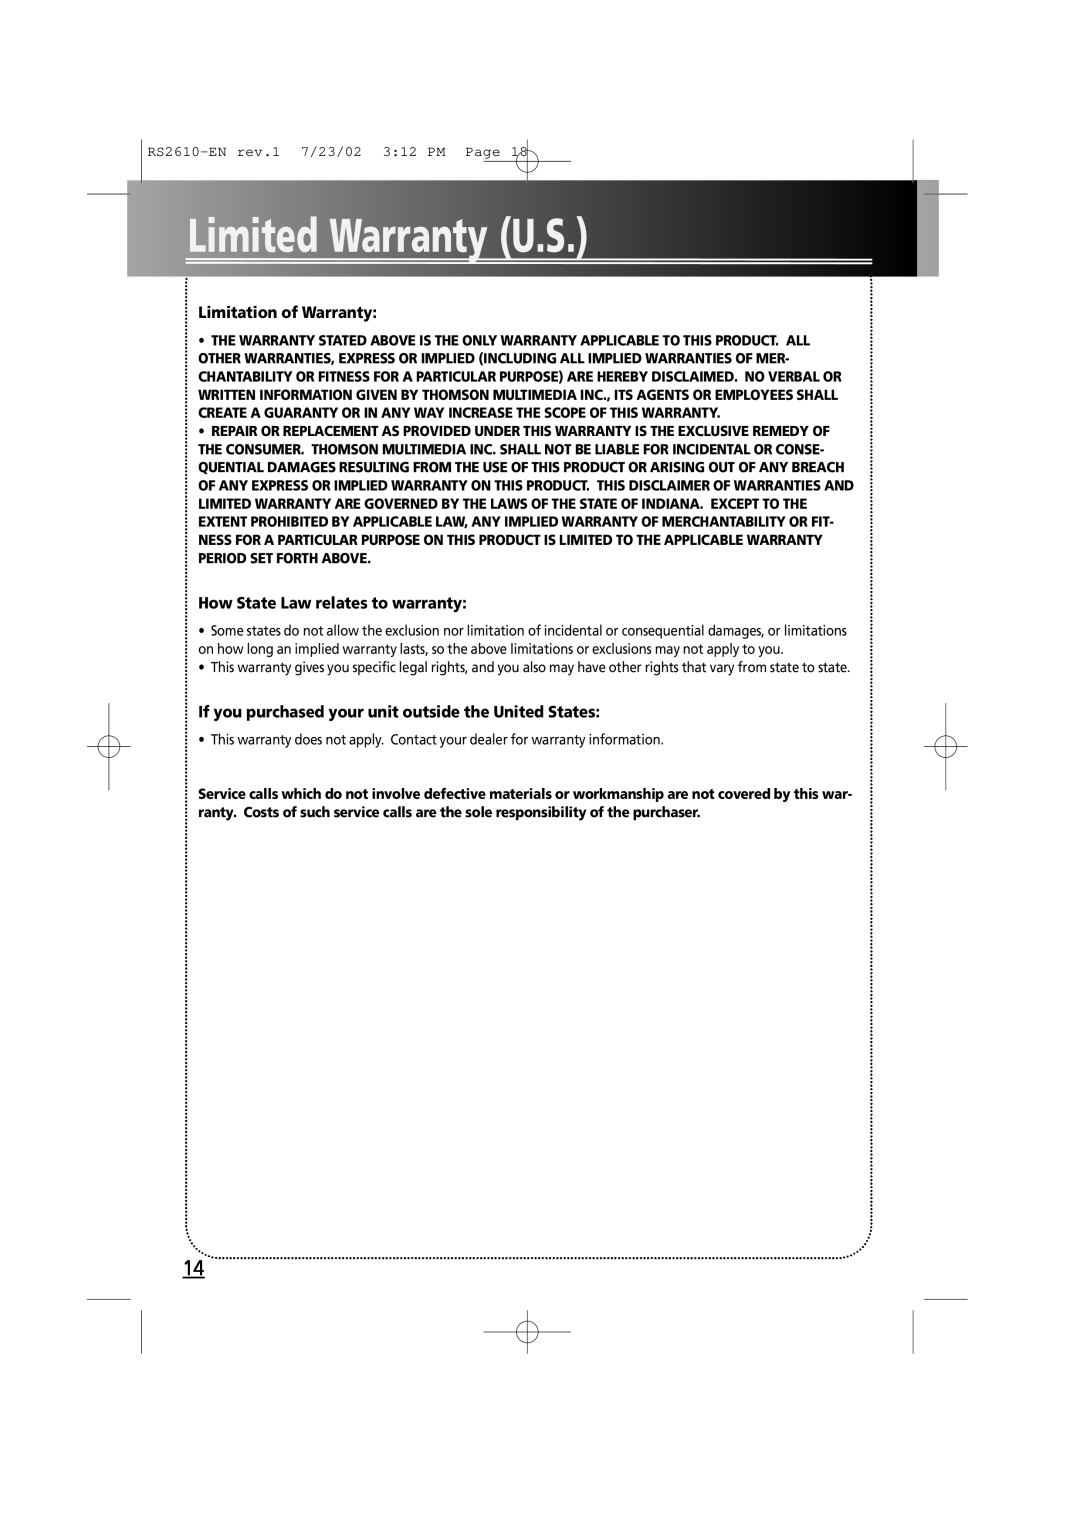 RCA RS2610 manual Limited Warranty U.S, Limitation of Warranty, How State Law relates to warranty 